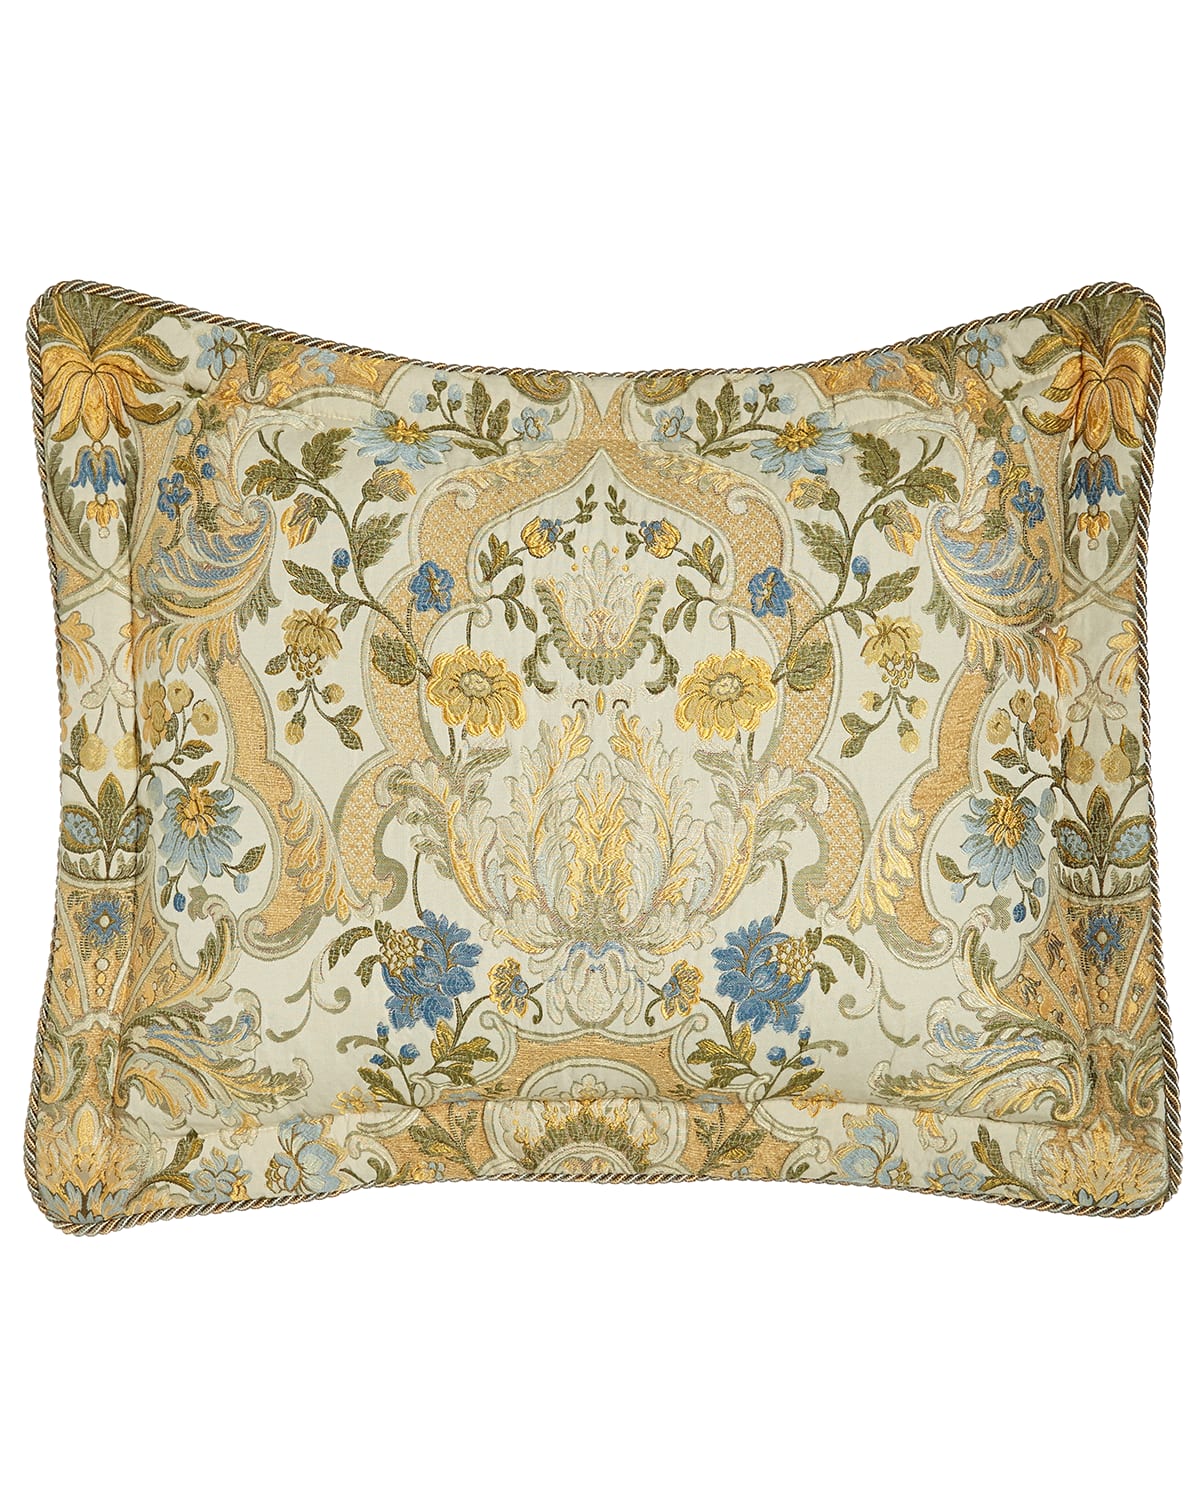 Image Austin Horn Collection Manor Queen Three-Piece Comforter Set